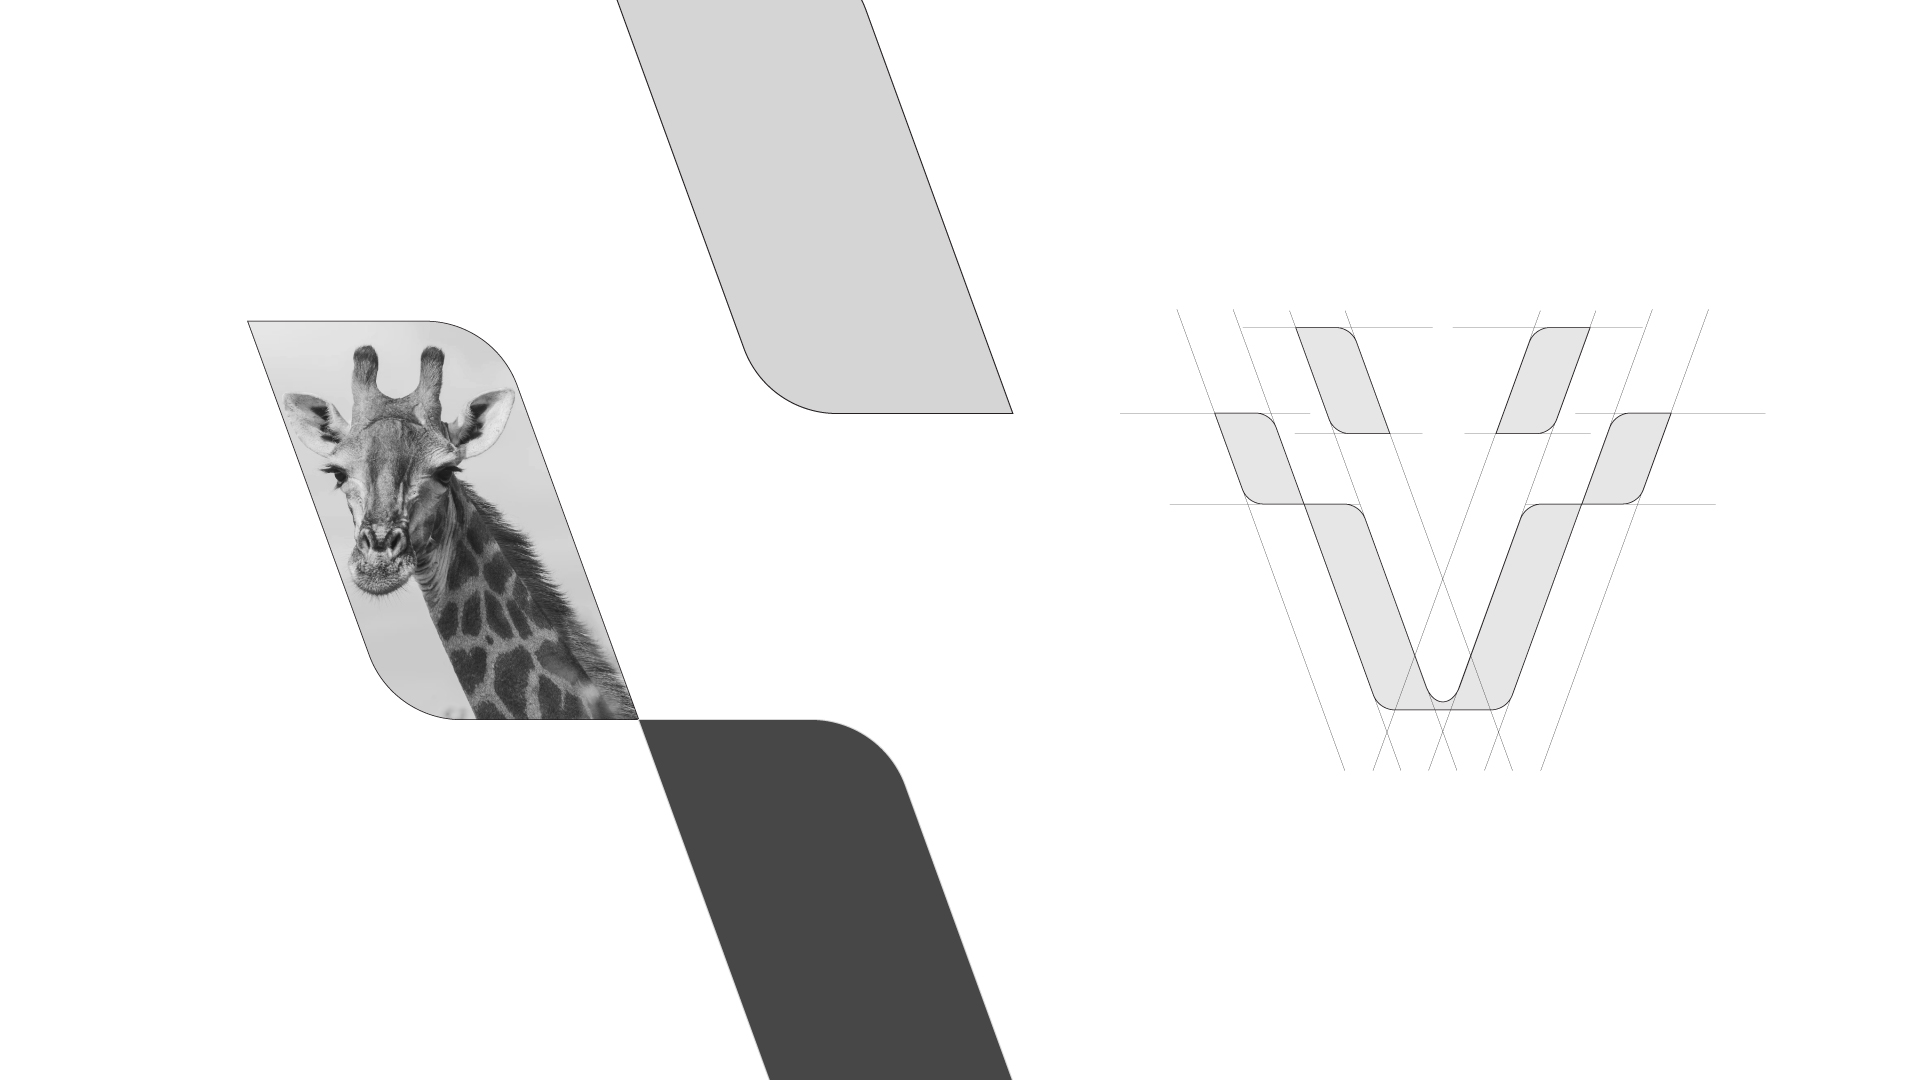 Giraffe logo idea and grid